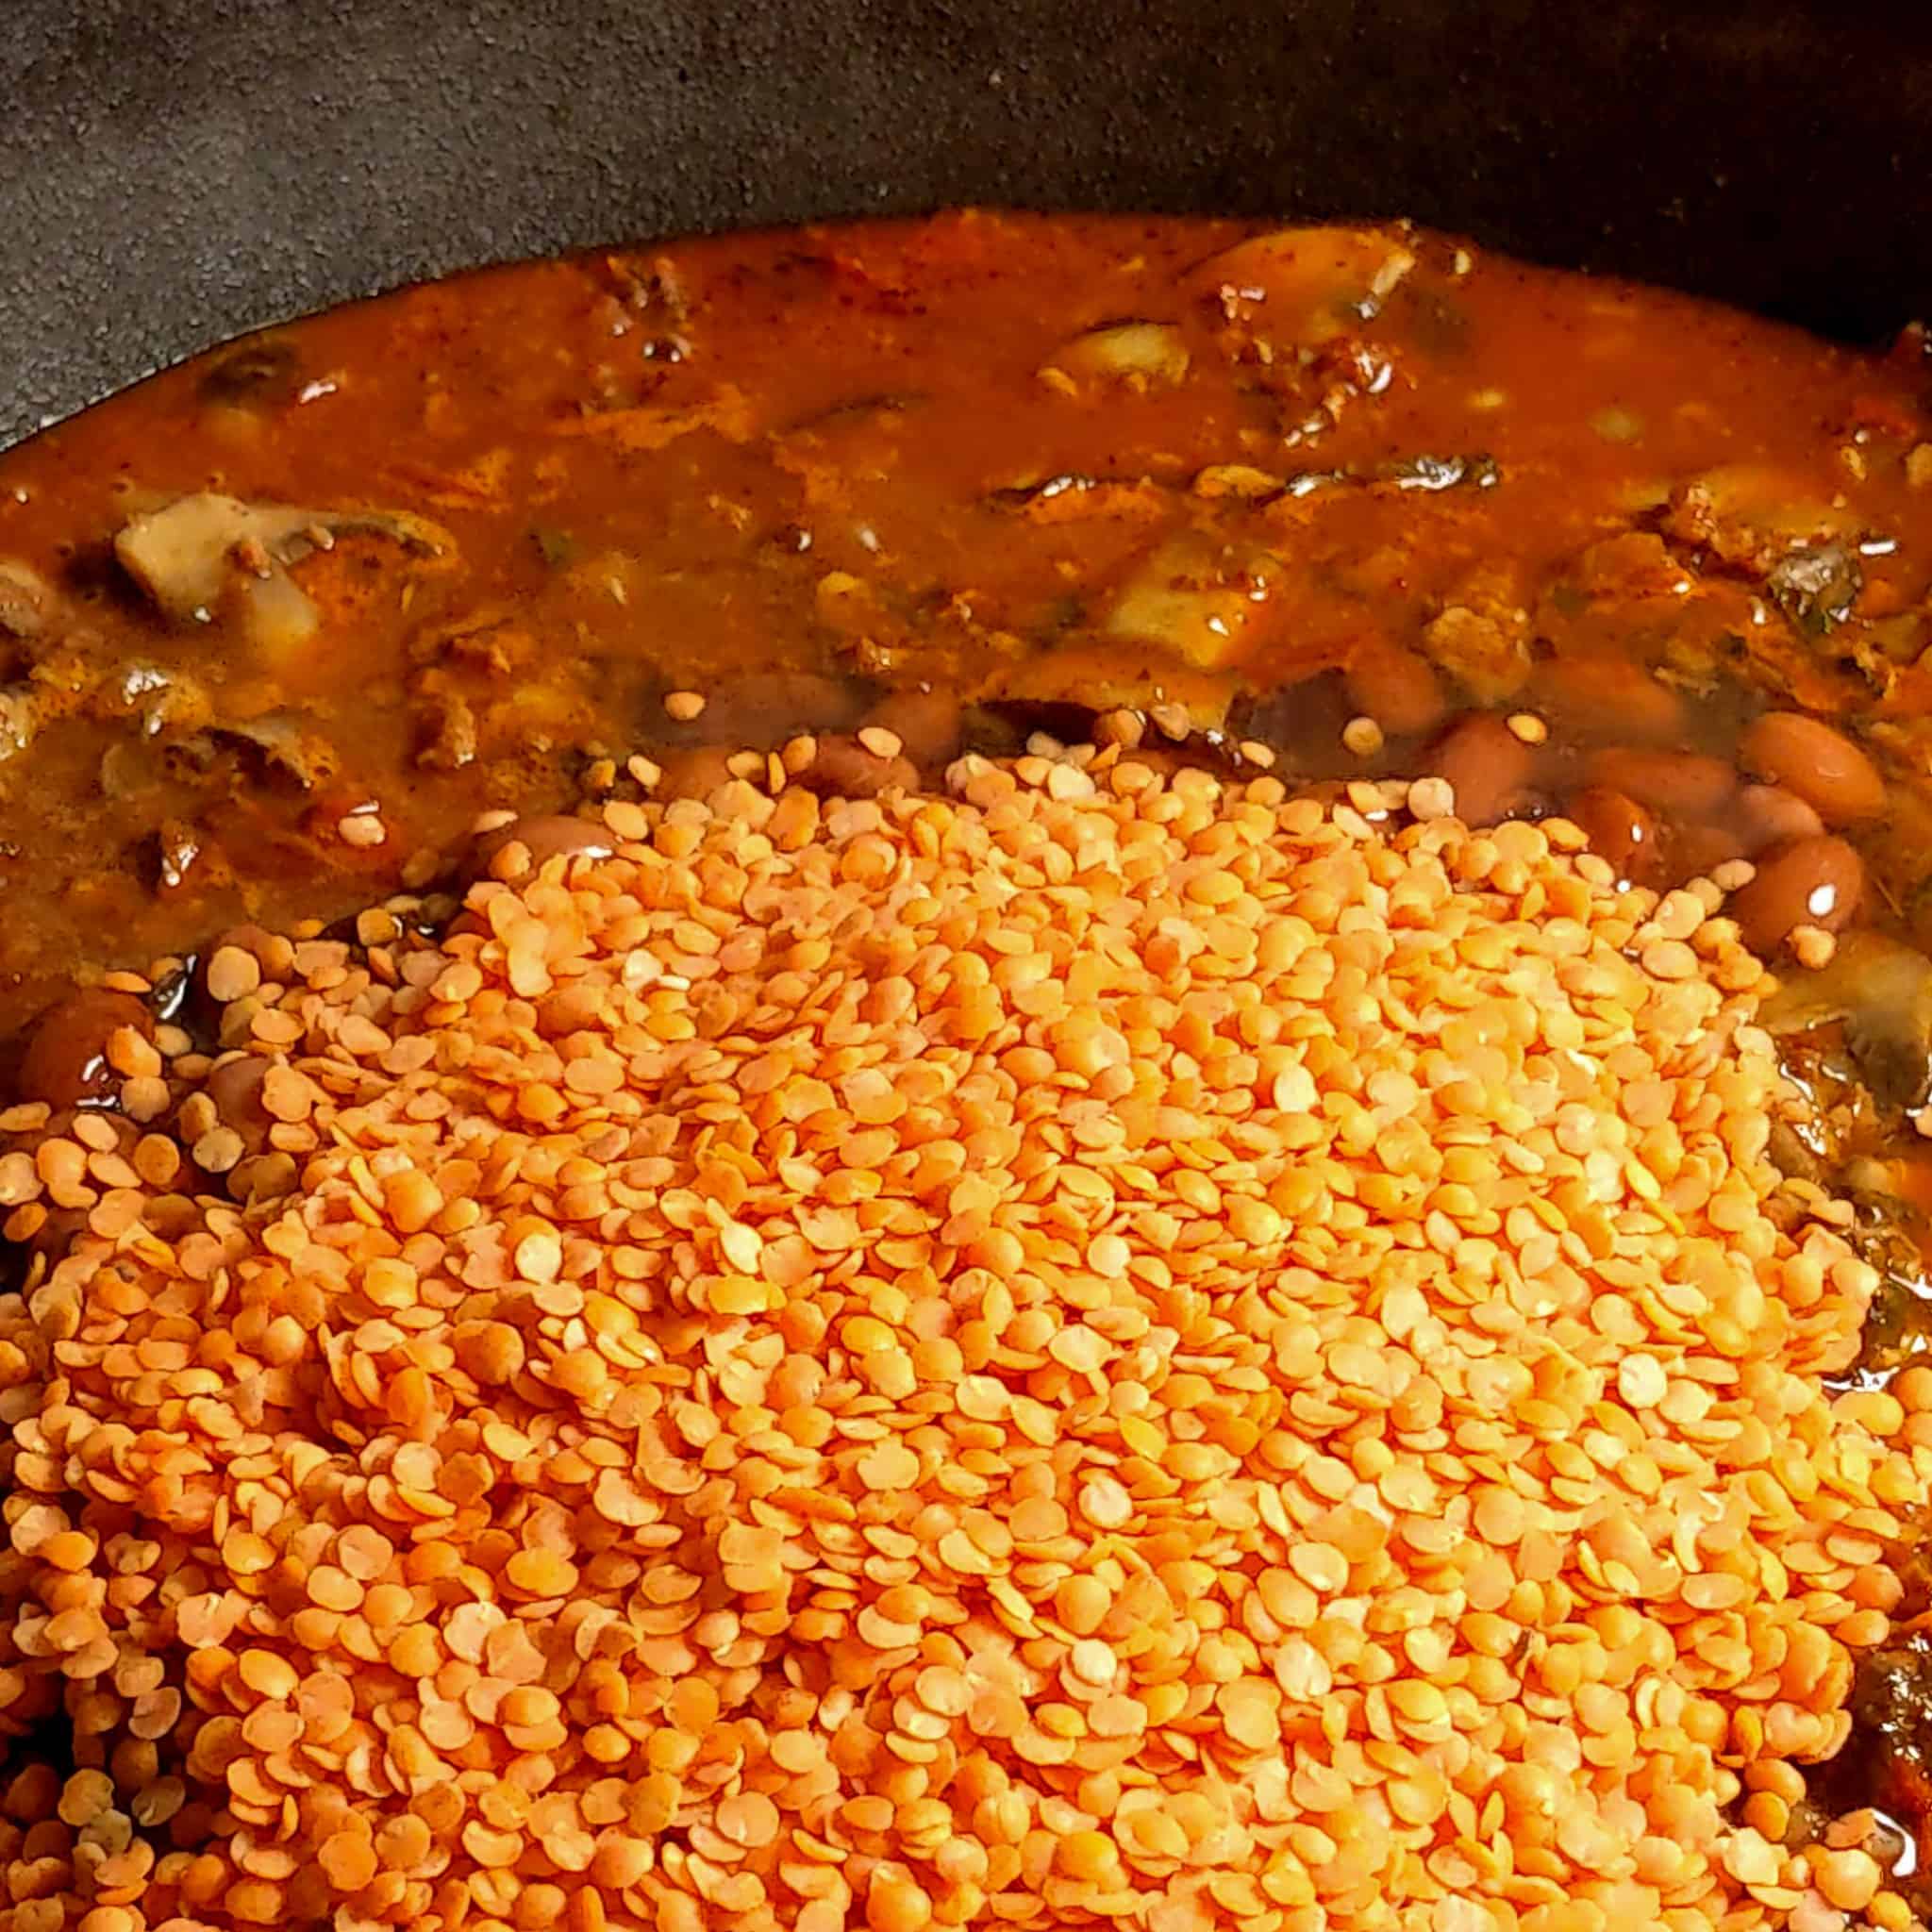 split red lentils added to the pinto beans, mushrooms and vegetables simmering in vegetable broth for the mushroom lentil bean chili